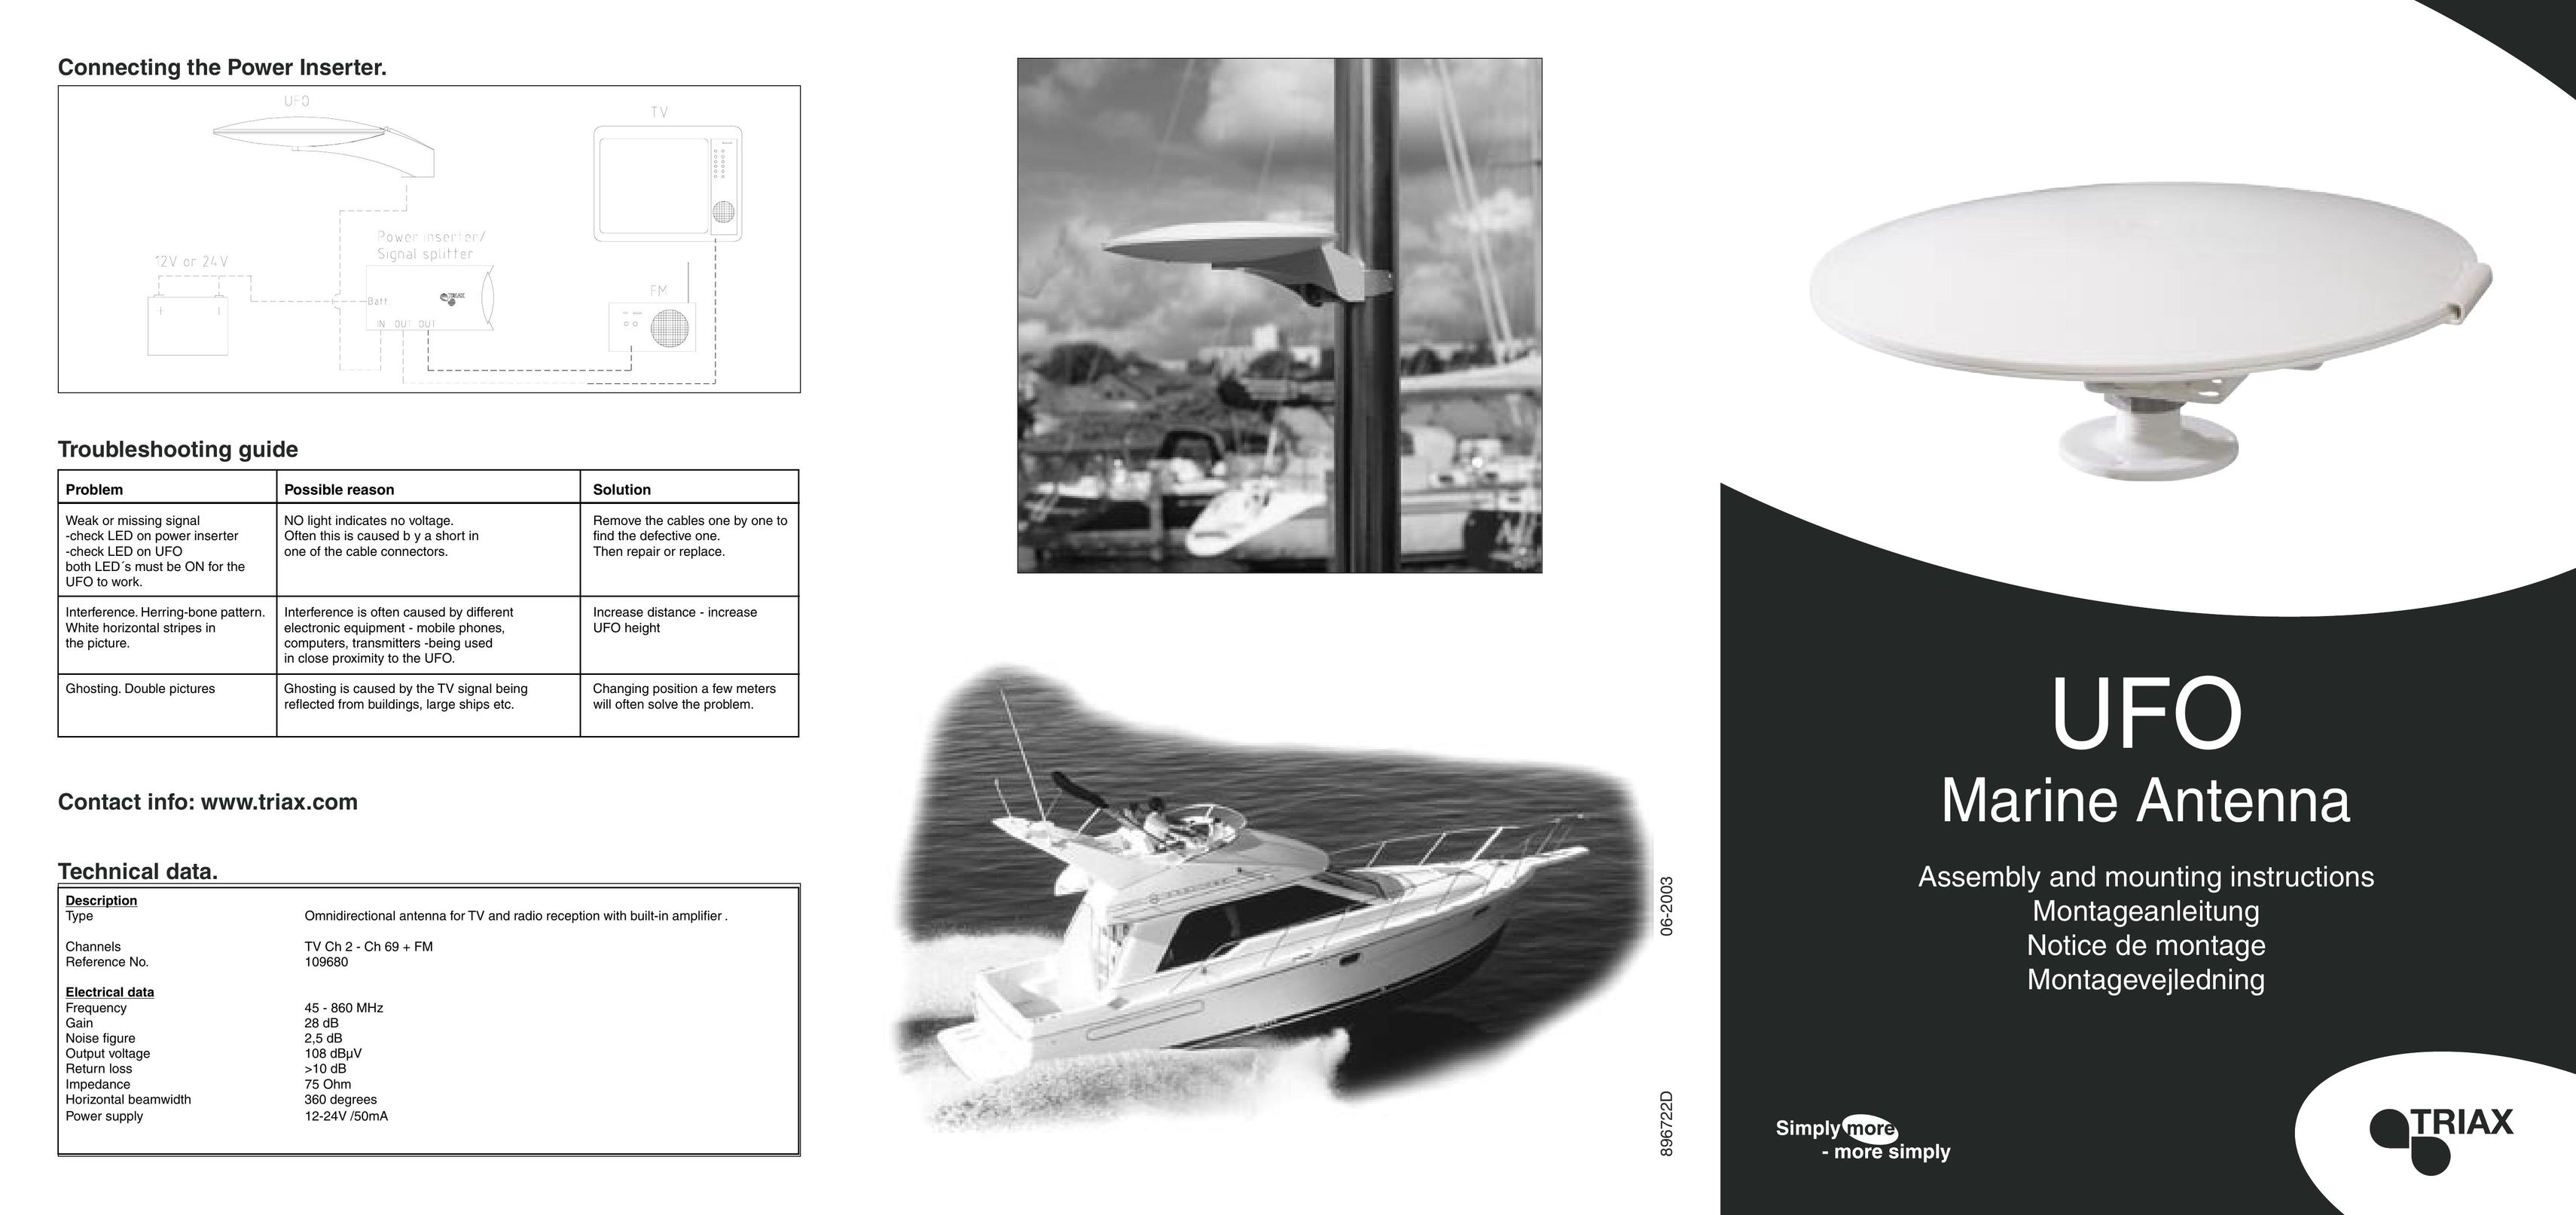 Triax UFO Marine Antenna Stereo System User Manual